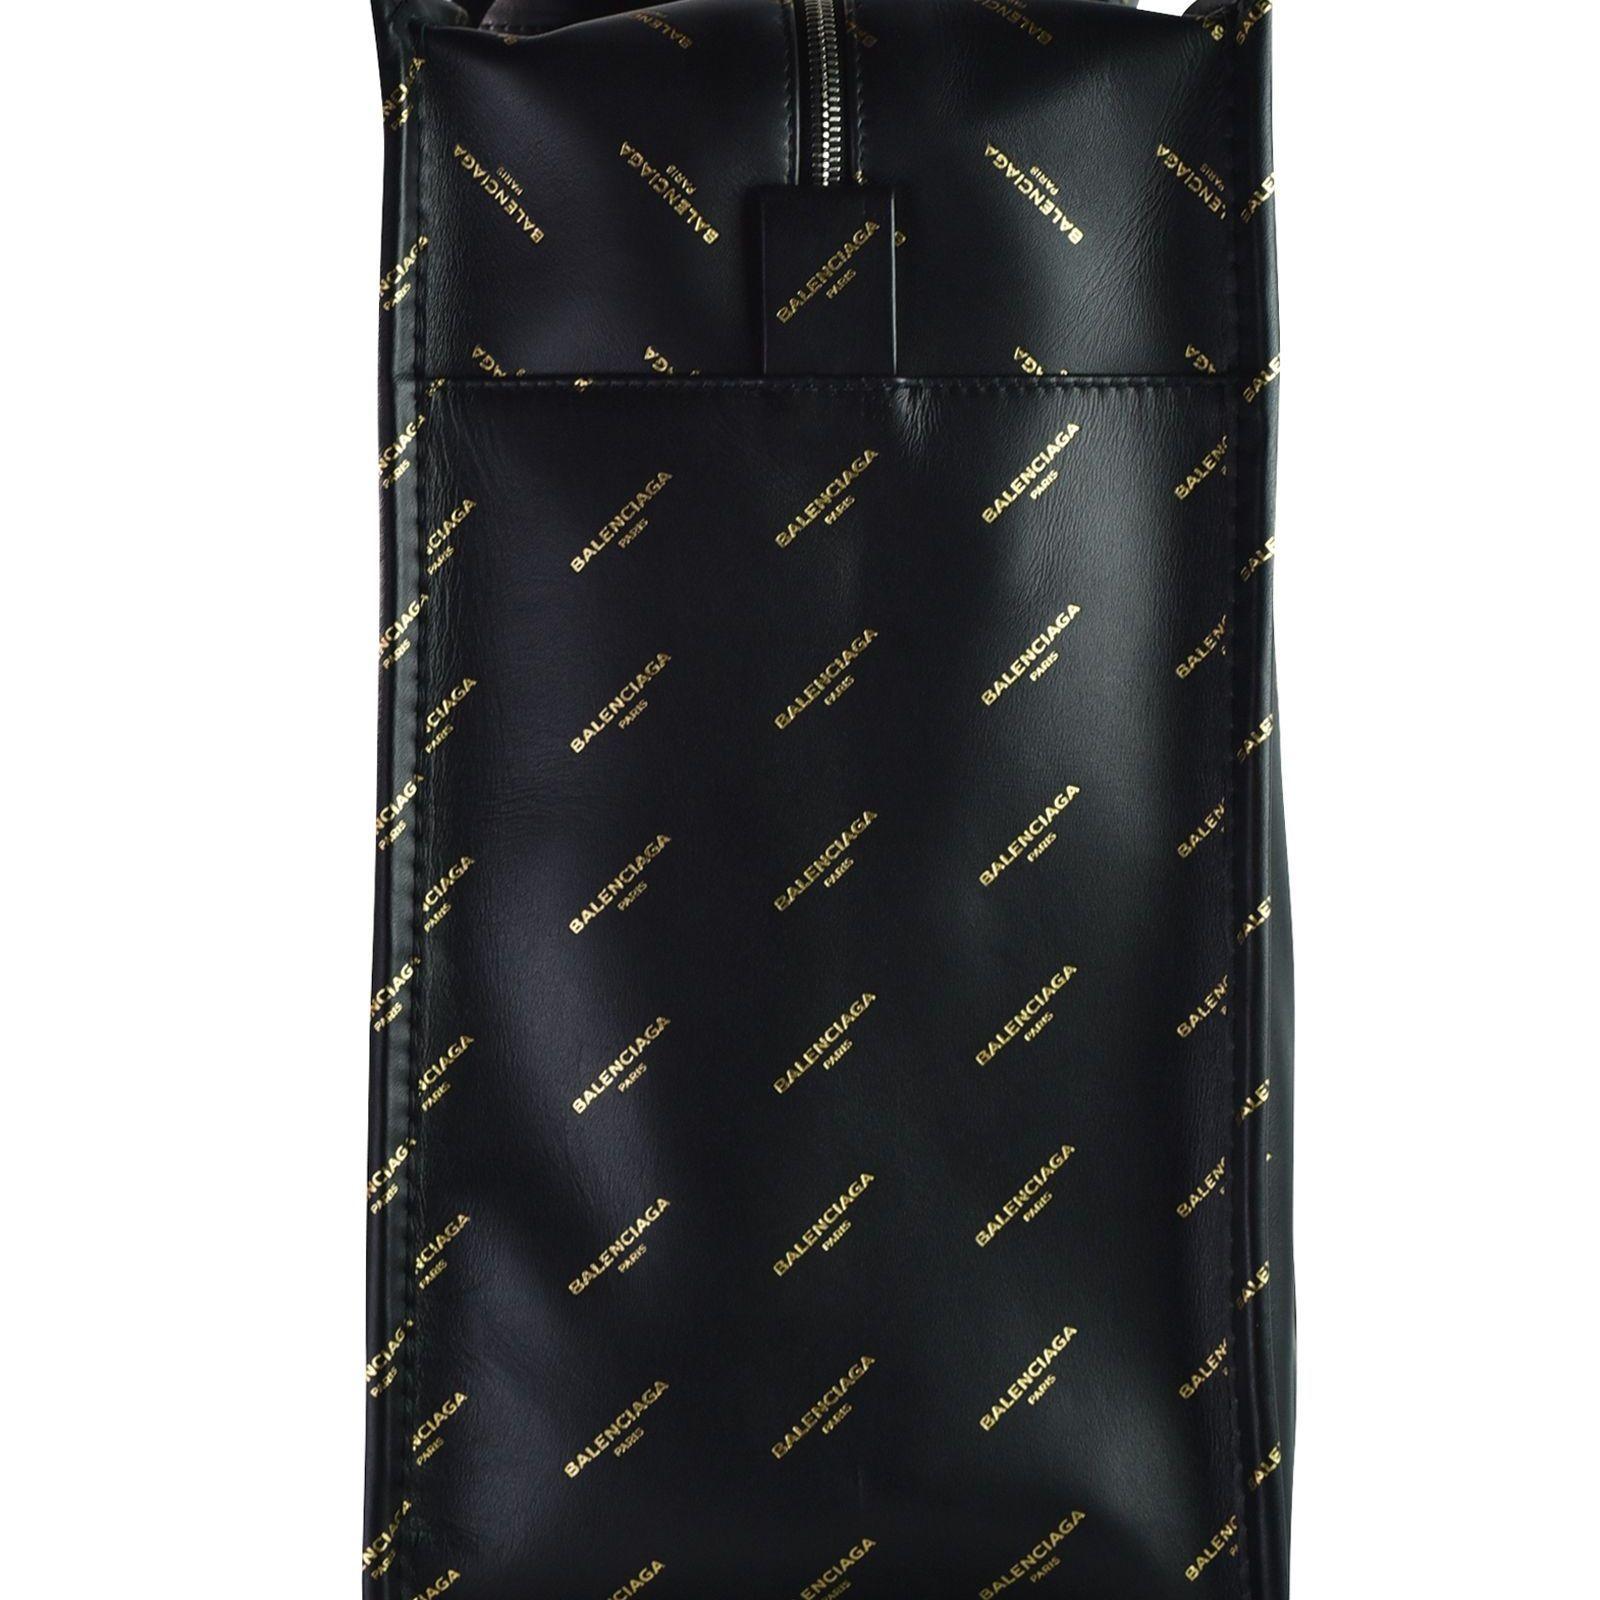 Balenciaga NEW Bazar Shopper M Black Leather Tote Bag Handbag 3